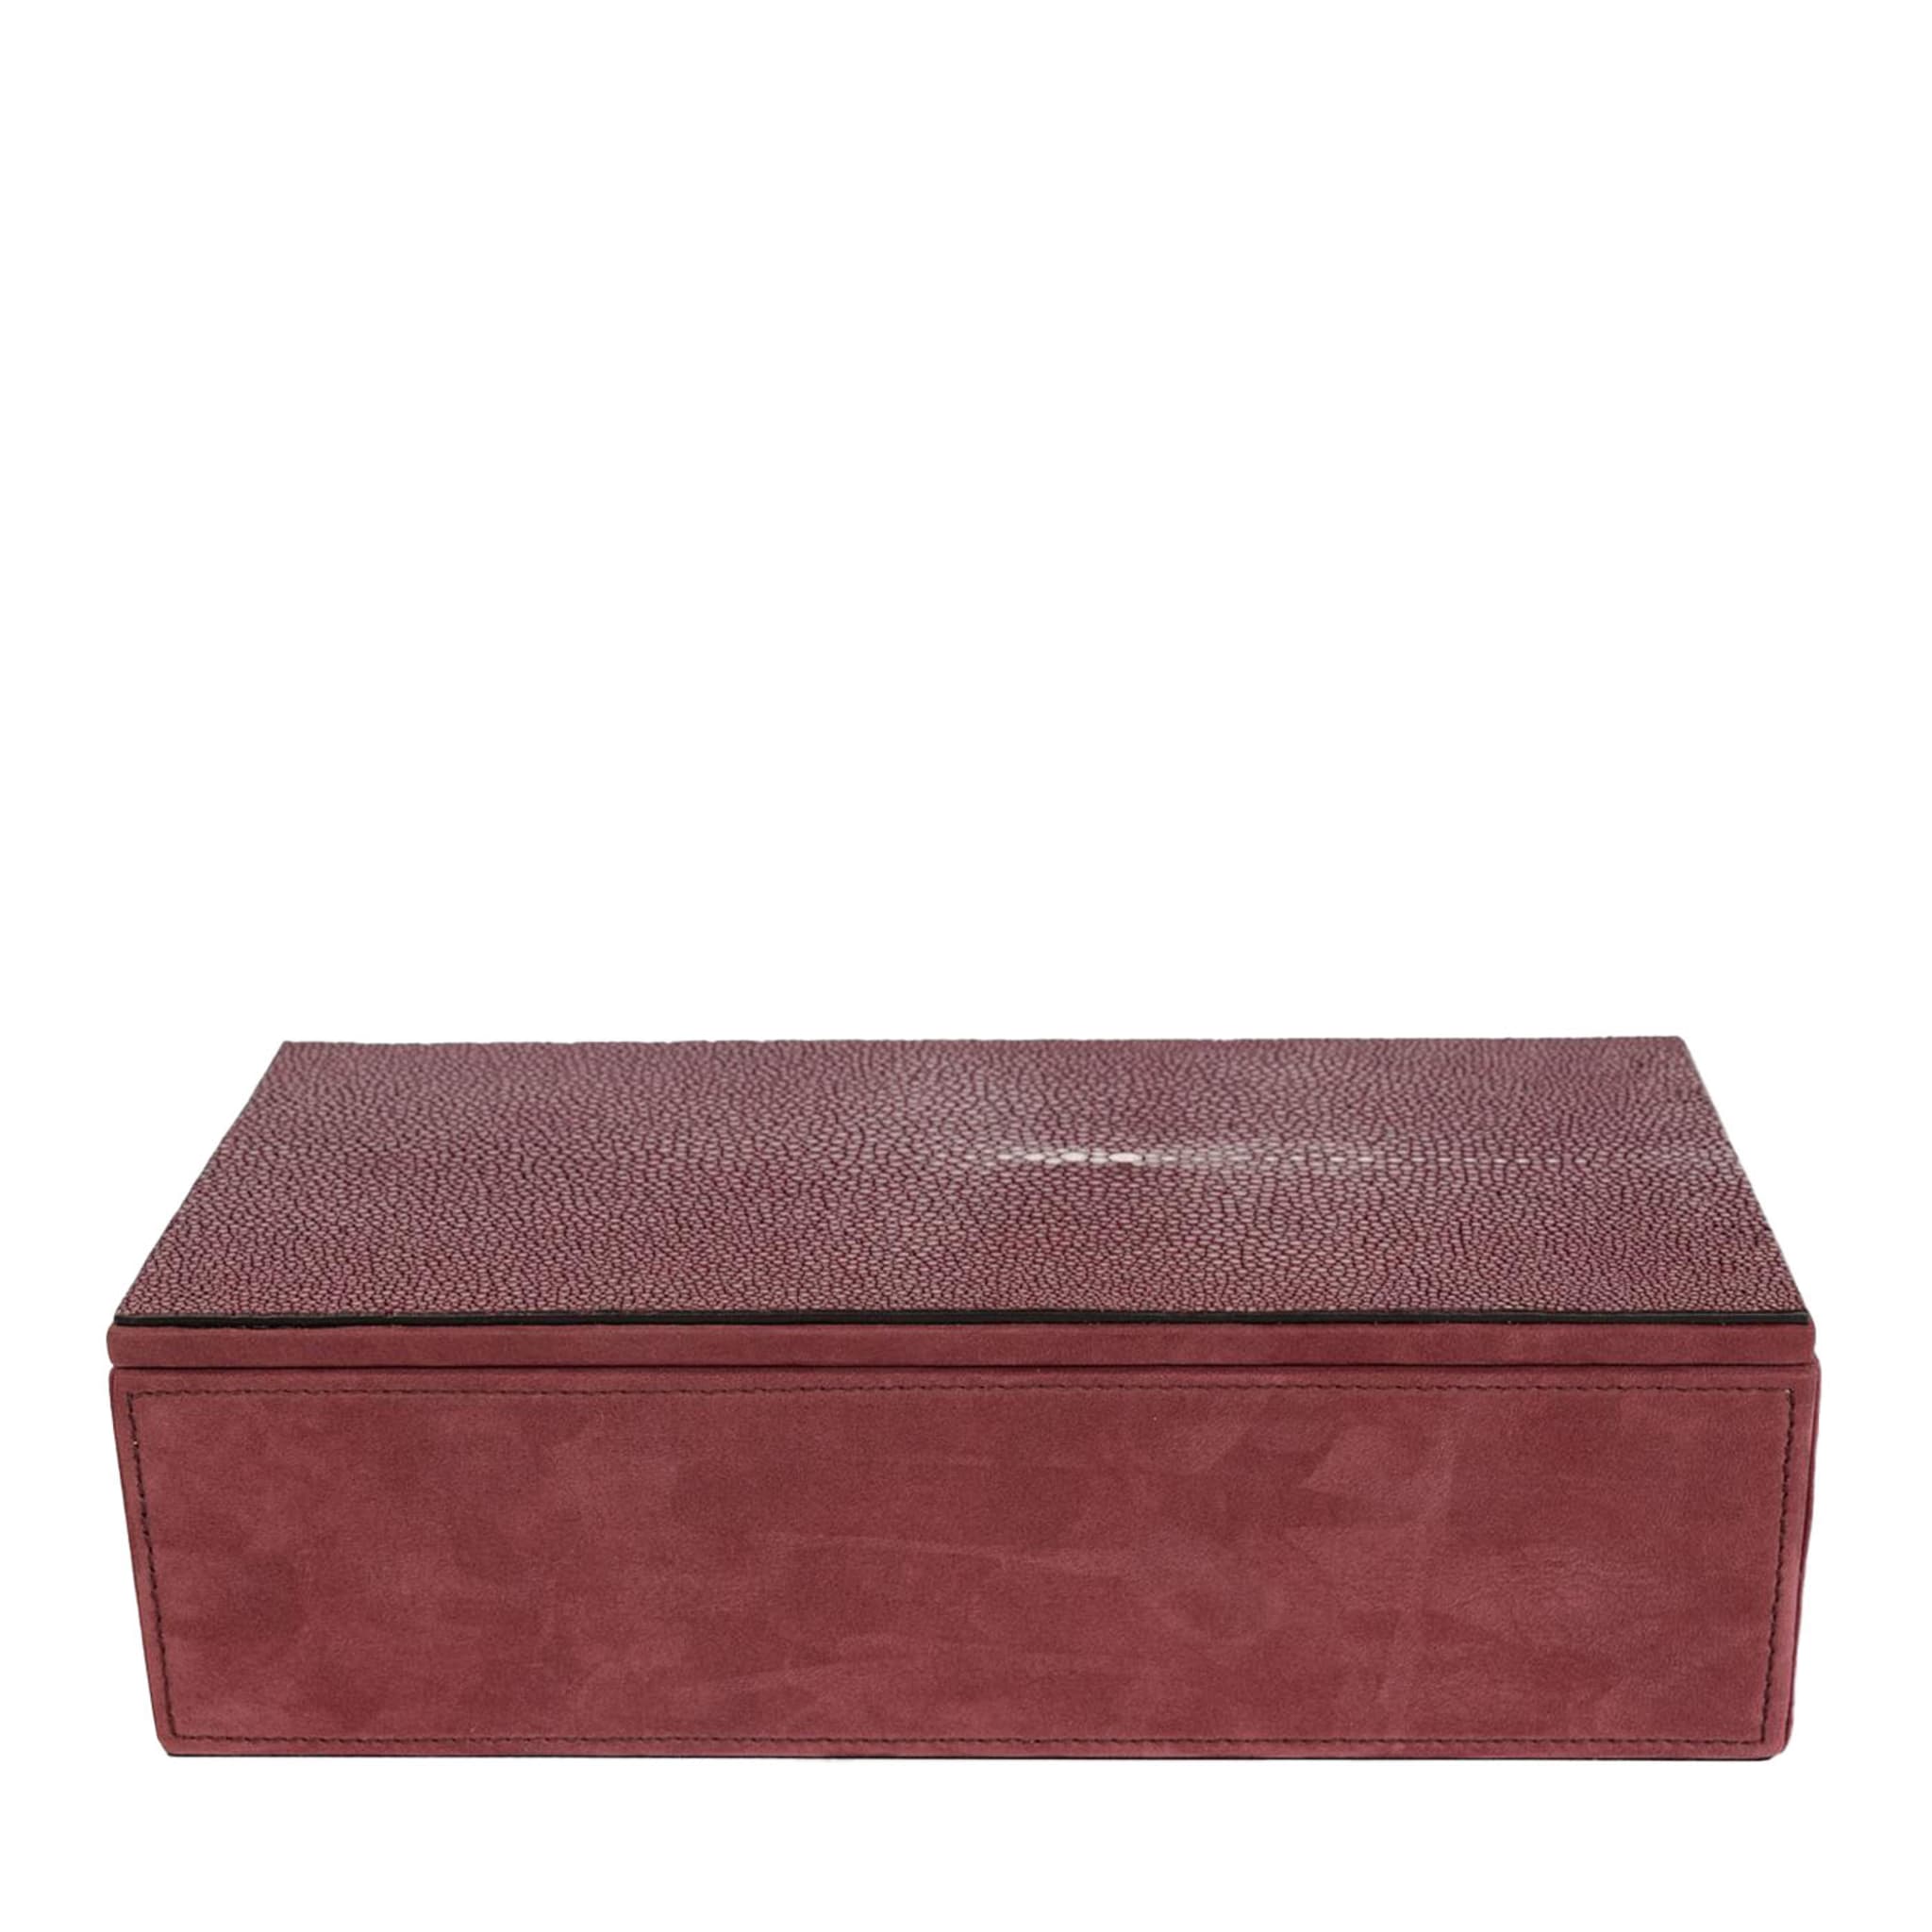 Stingray Persian Red Nubuck Leather Box - Main view